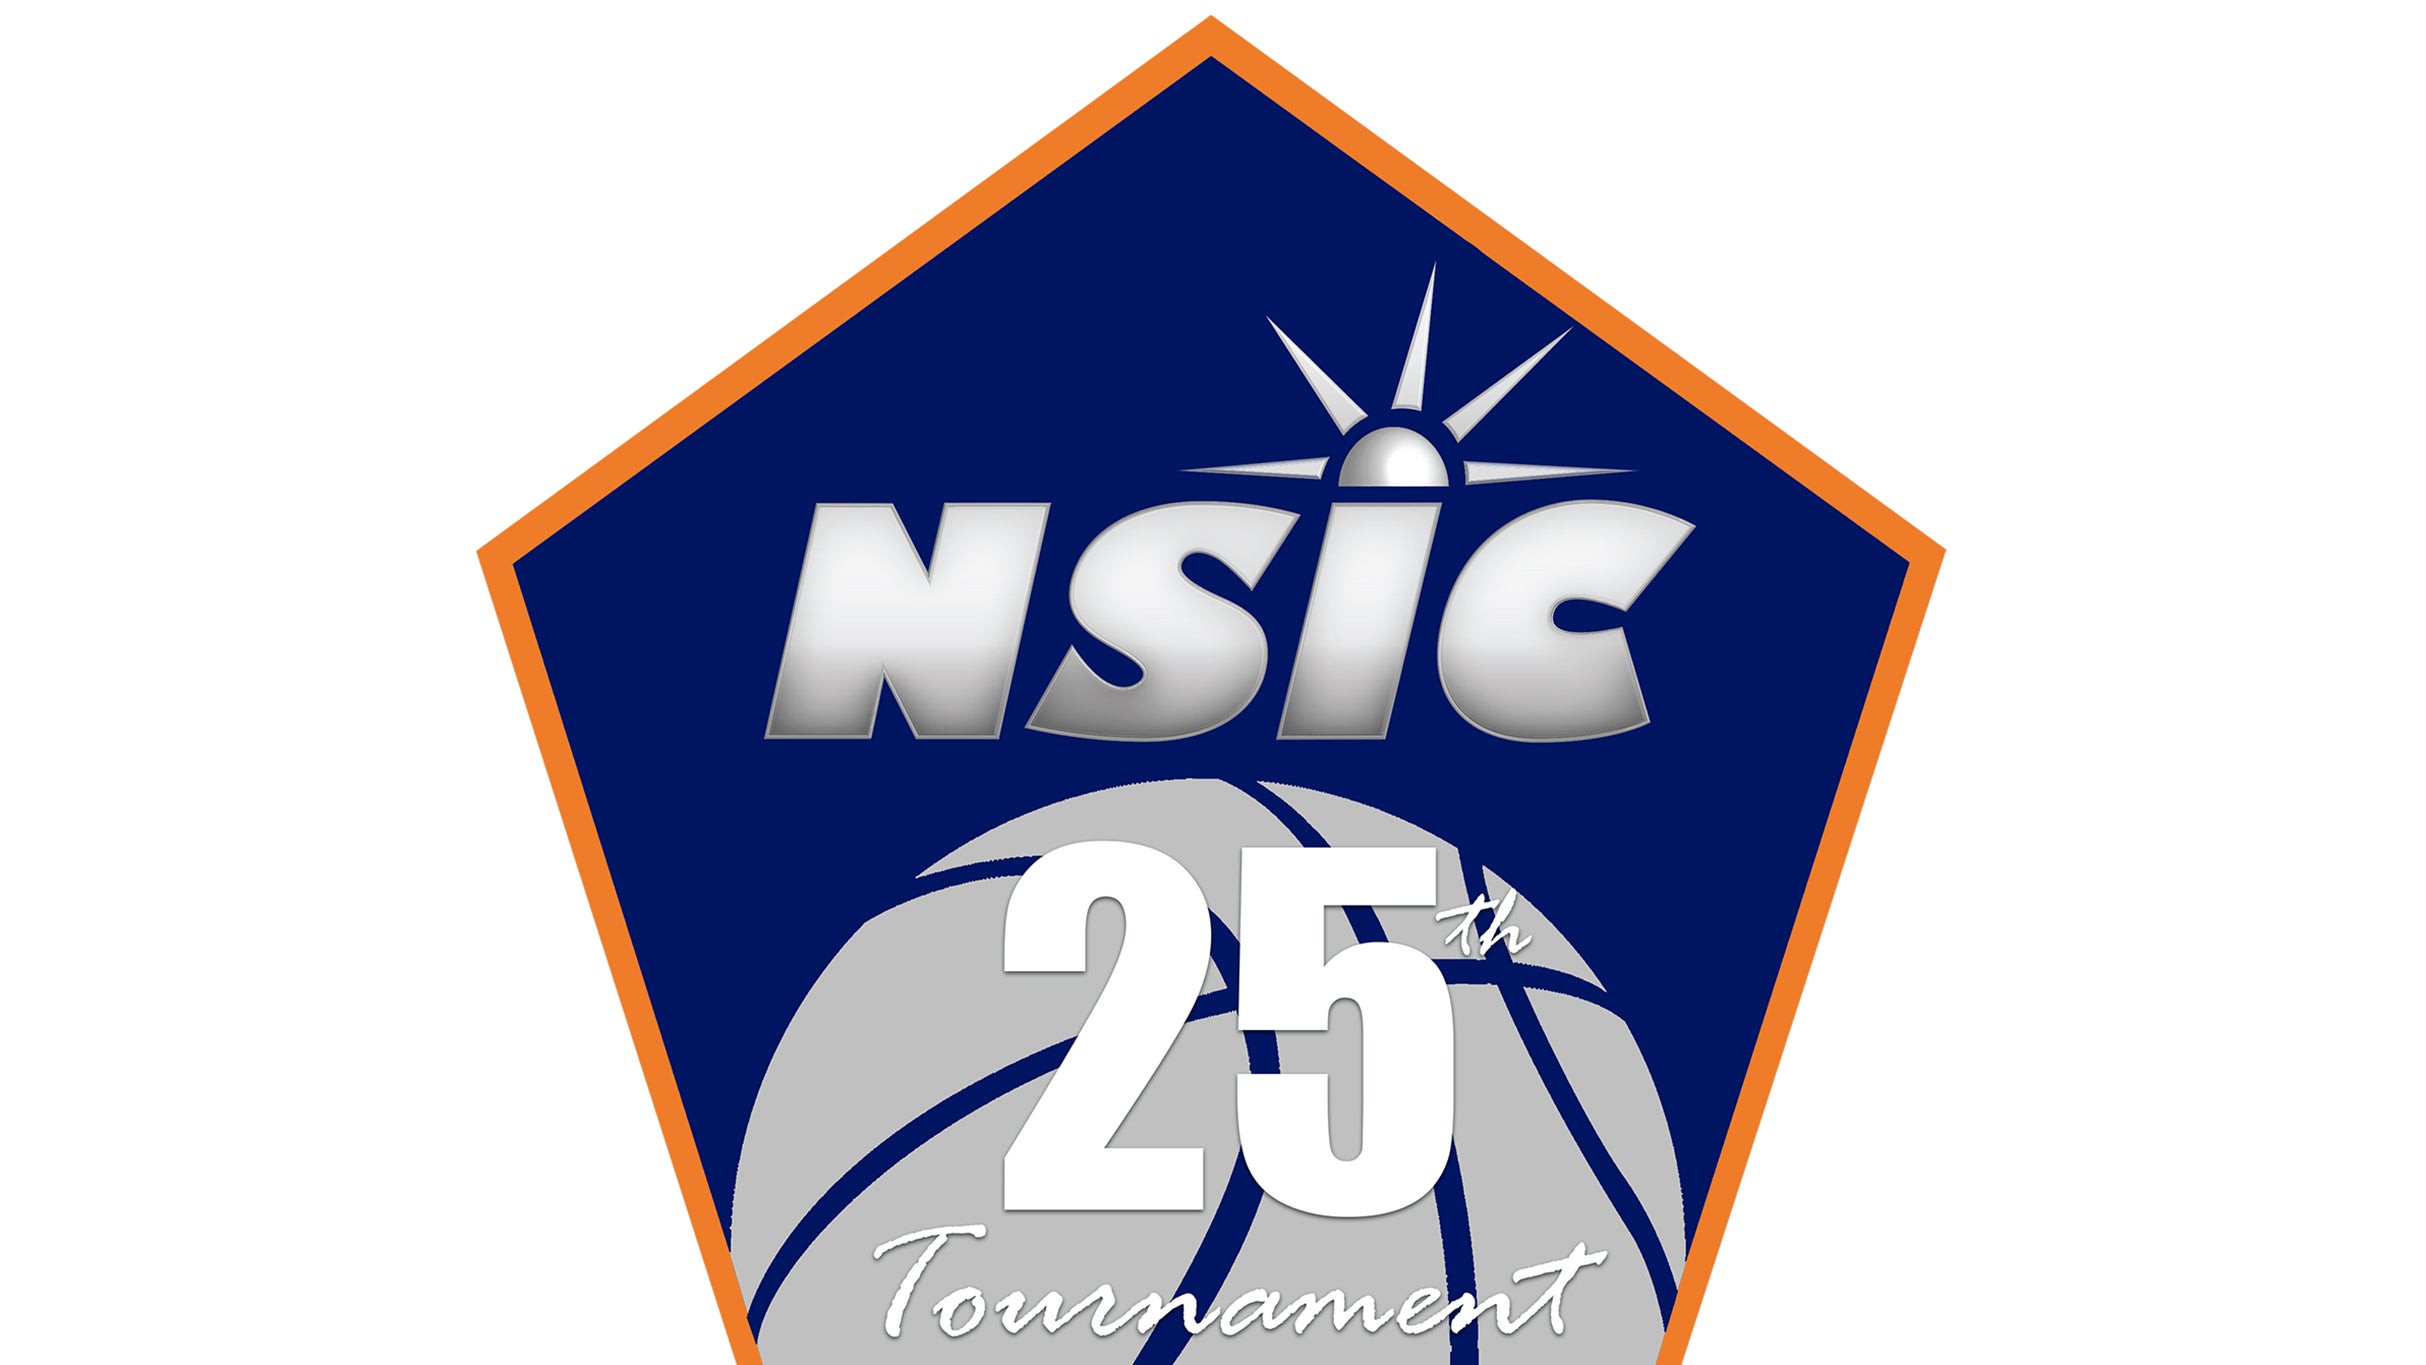 NSIC Tournament - Session 1-Men's at Sanford Pentagon - Sioux Falls, SD 57107